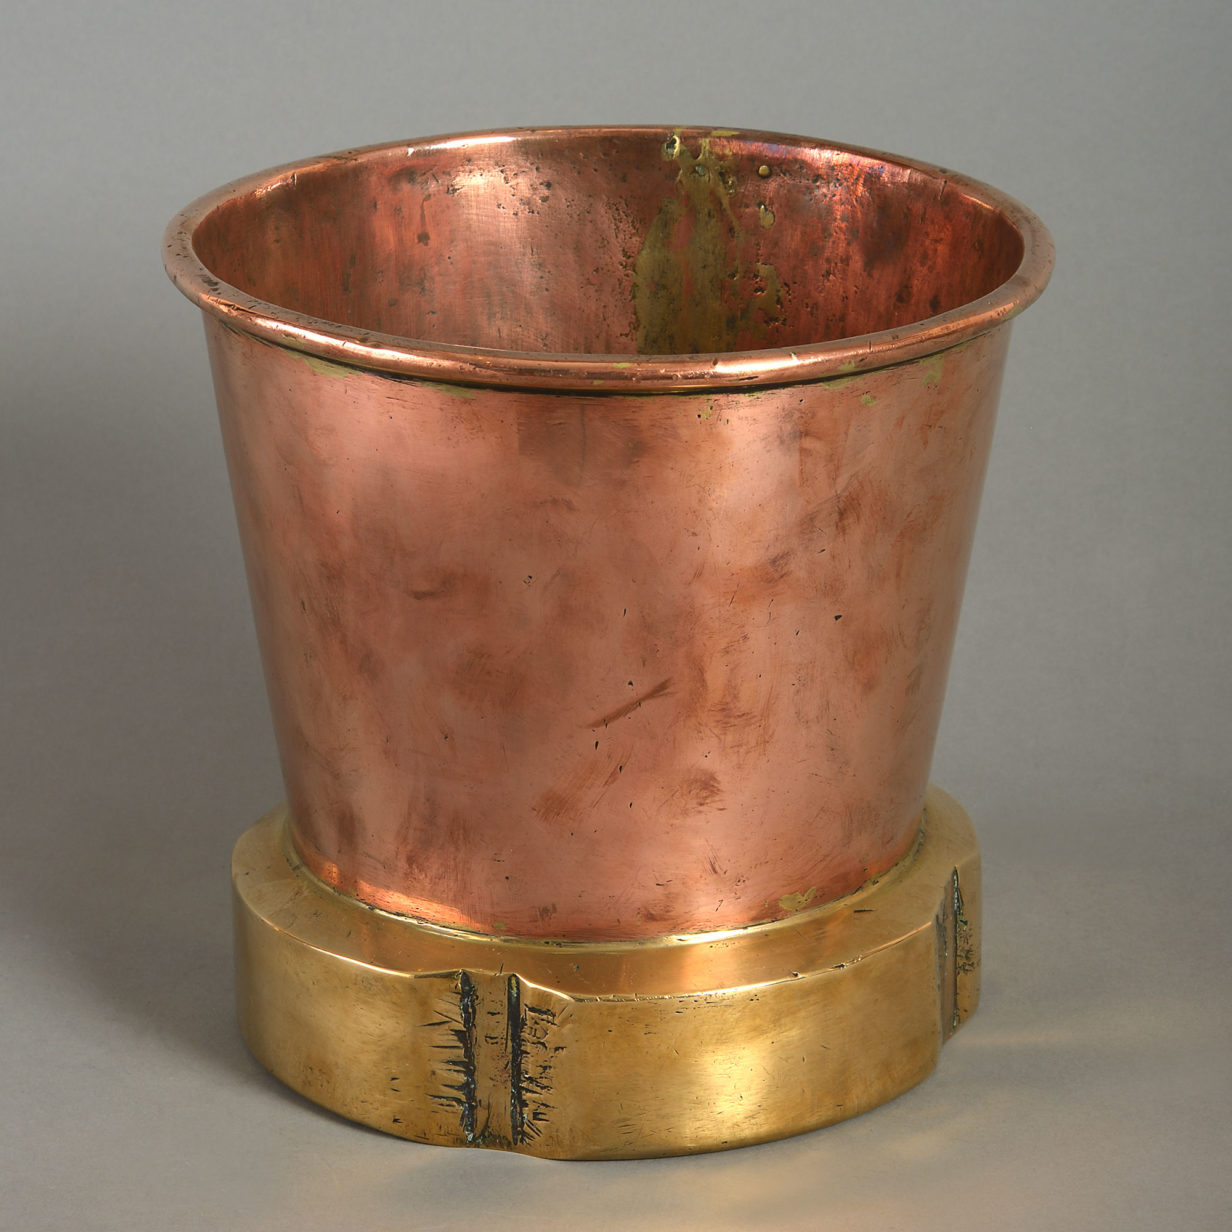 19th century victorian period brass & copper cooler or planter